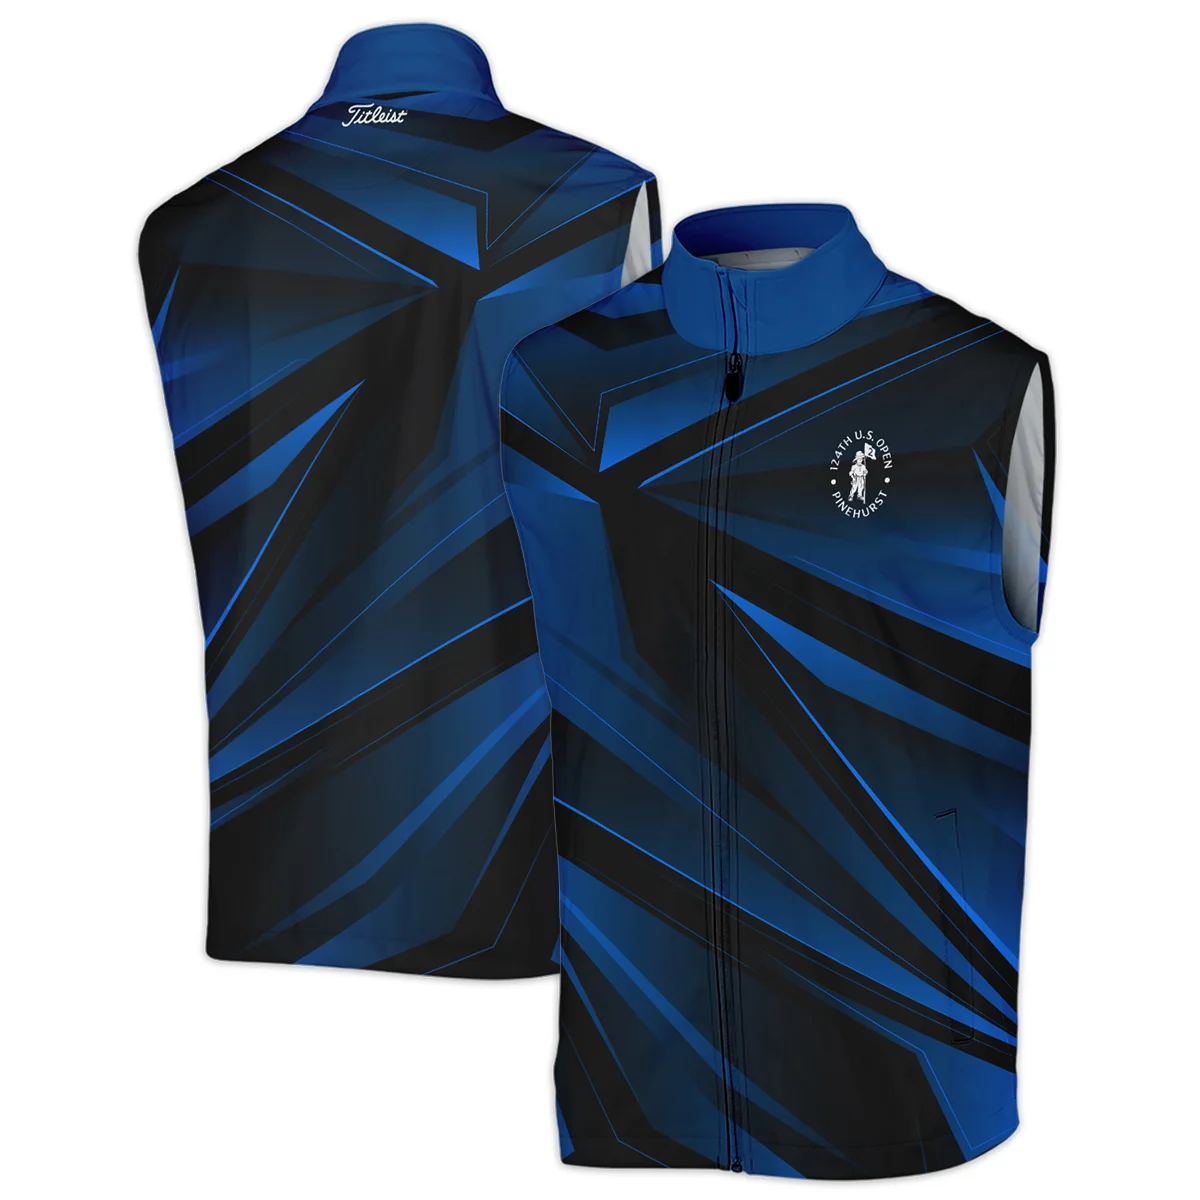 Titleist 124th U.S. Open Pinehurst Dark Blue Gradient Sublimation Zipper Polo Shirt Style Classic